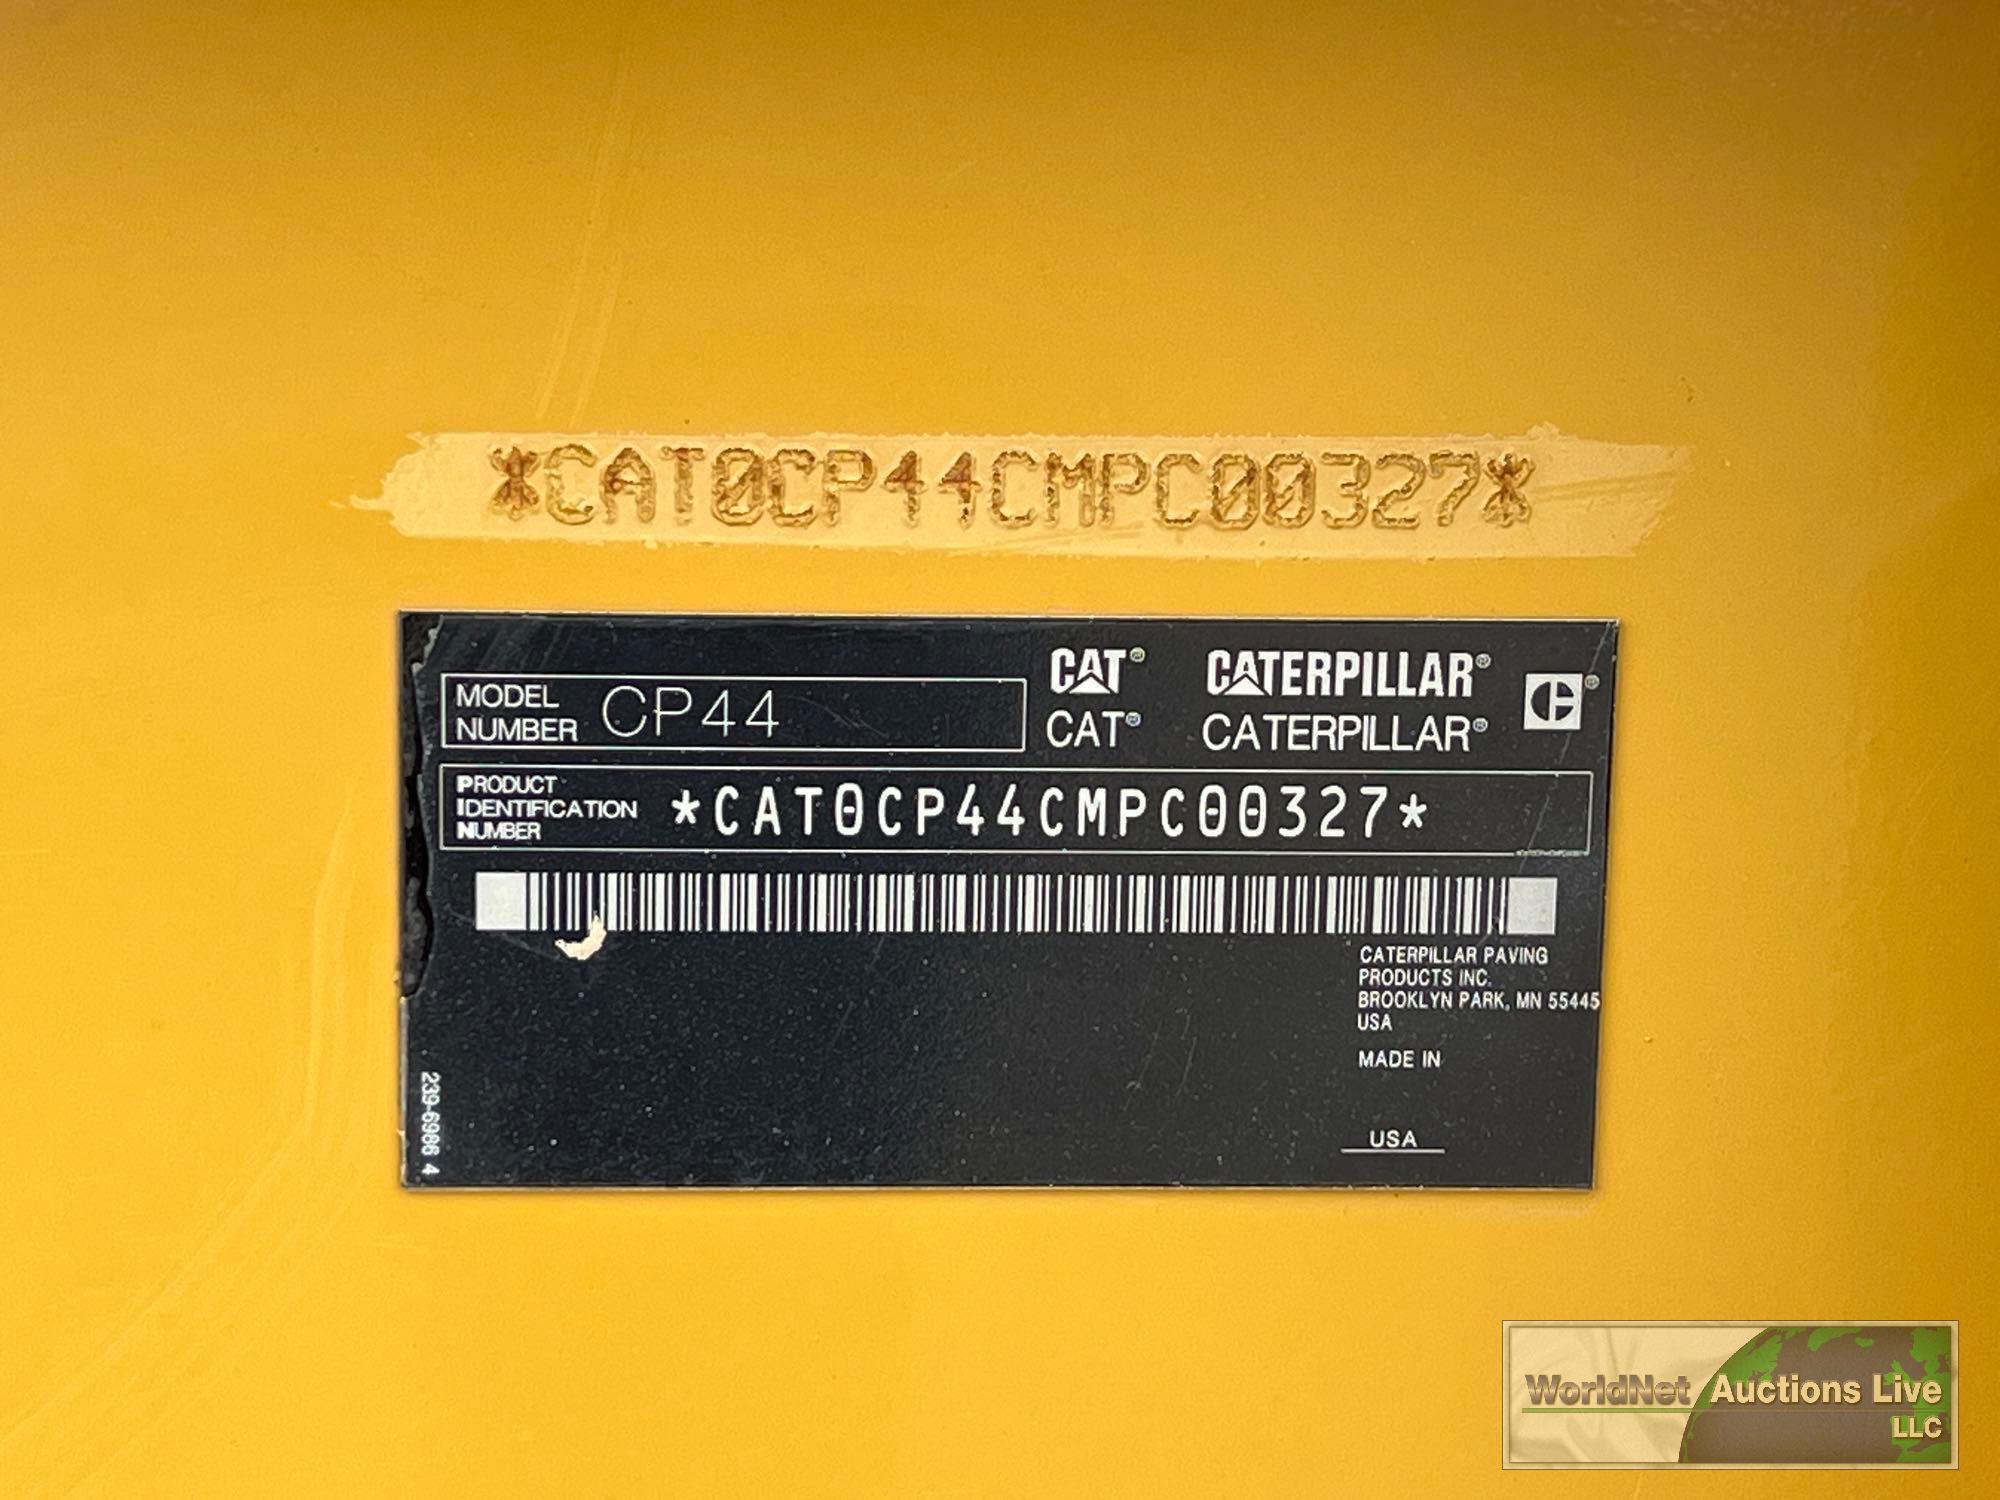 2014 CATERPILLAR CP44 VIBRATORY COMPACTOR SN-CAT0CP44CMPC00327